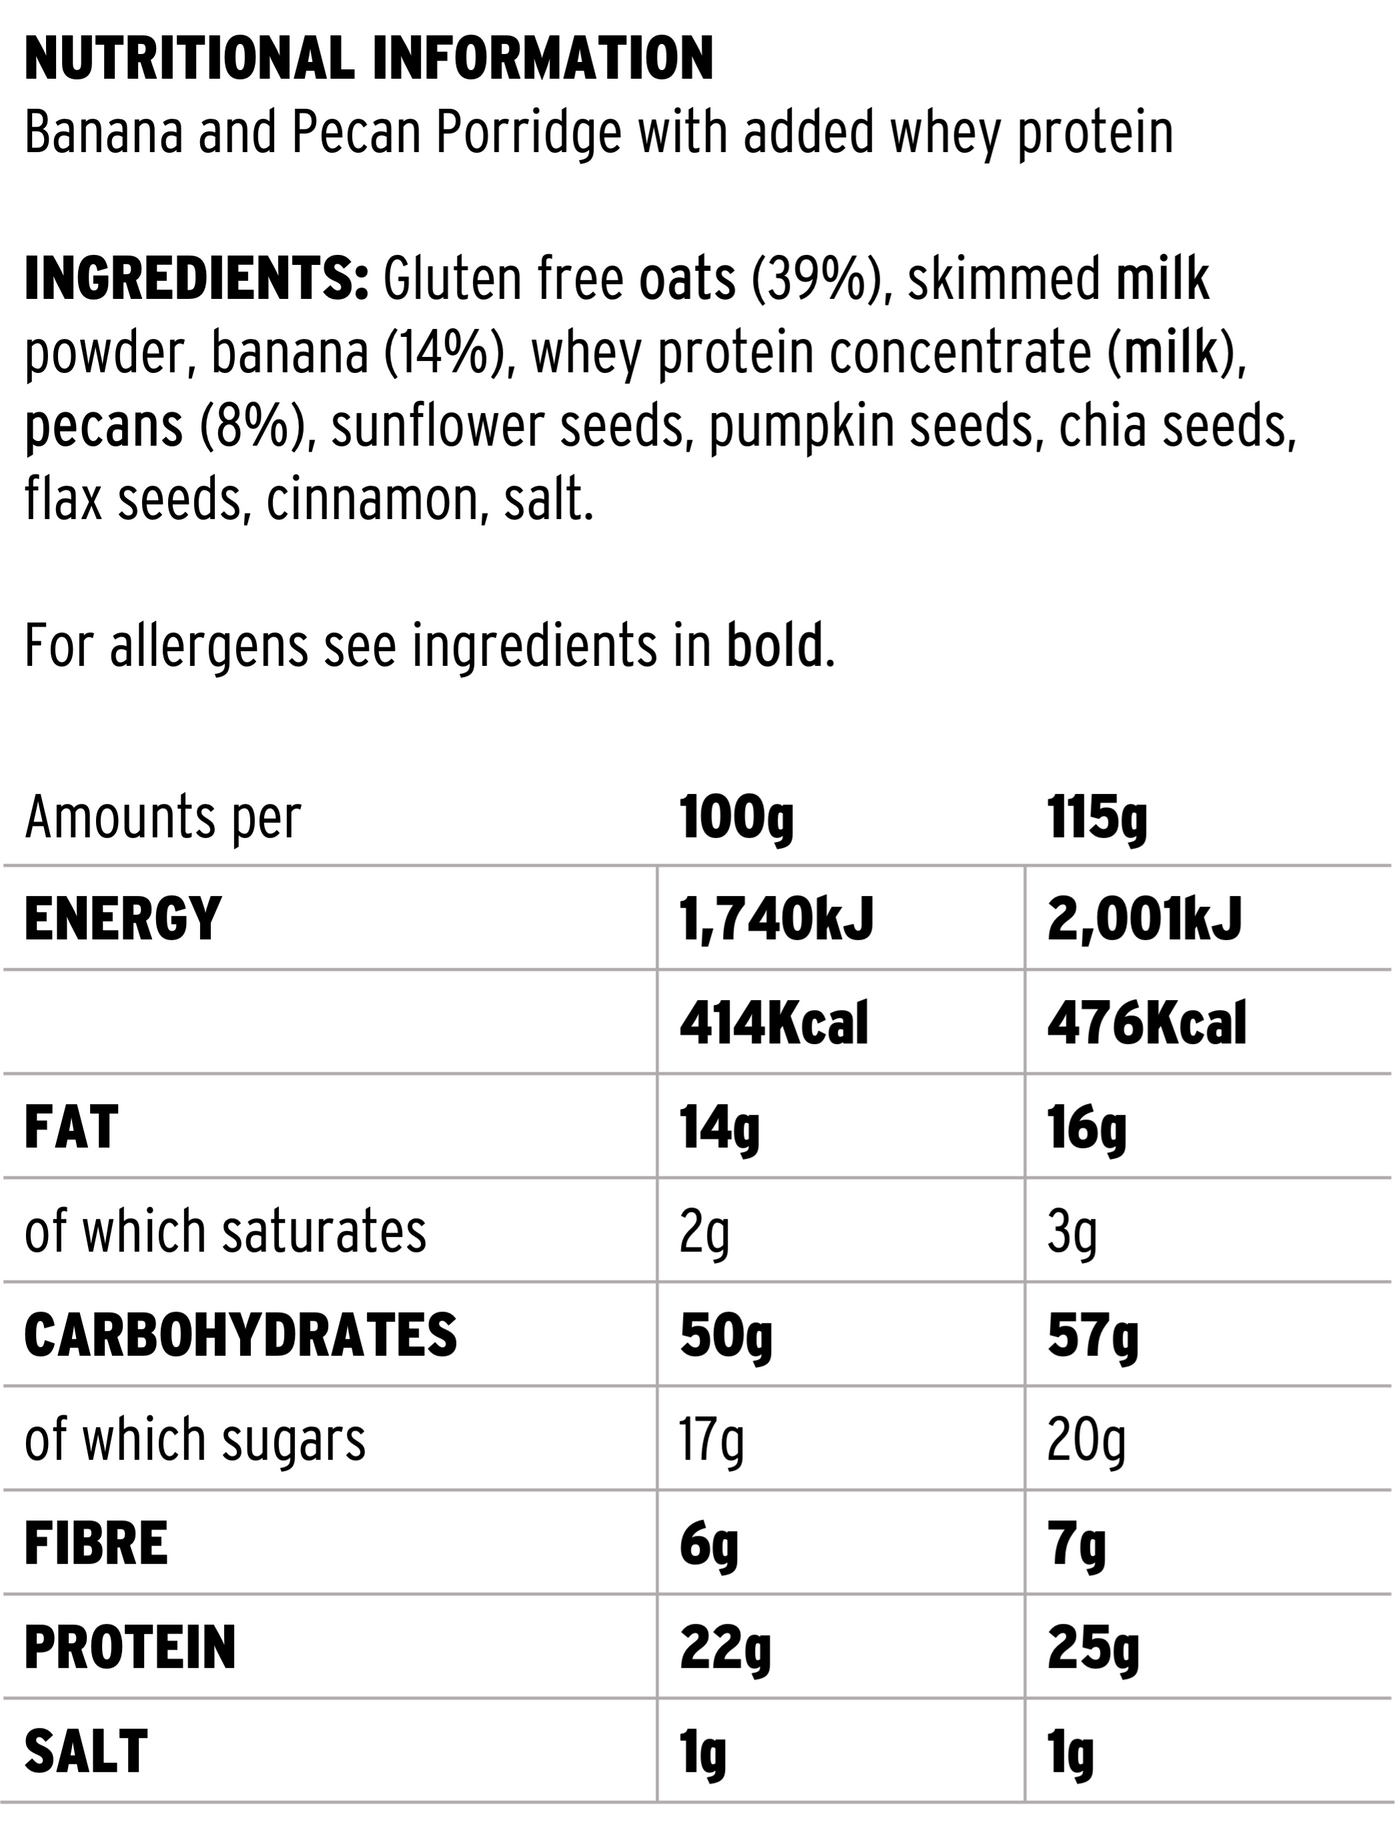 Resilient Nutrition - High Protein Porridge